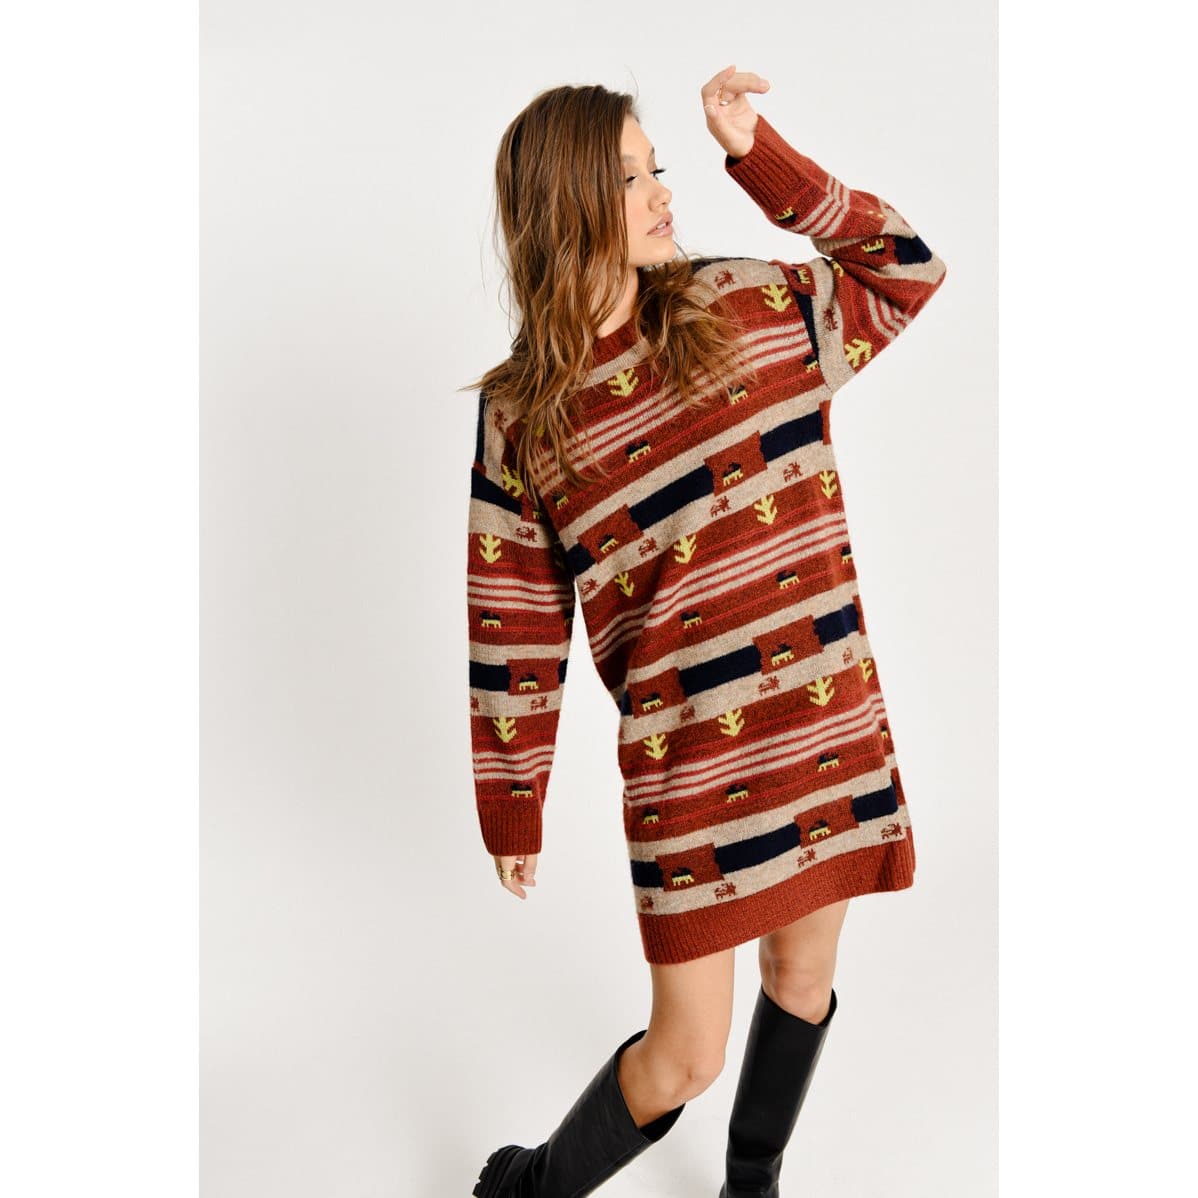 Molly Bracken - Ladies Knitted Dress - Rust (1)